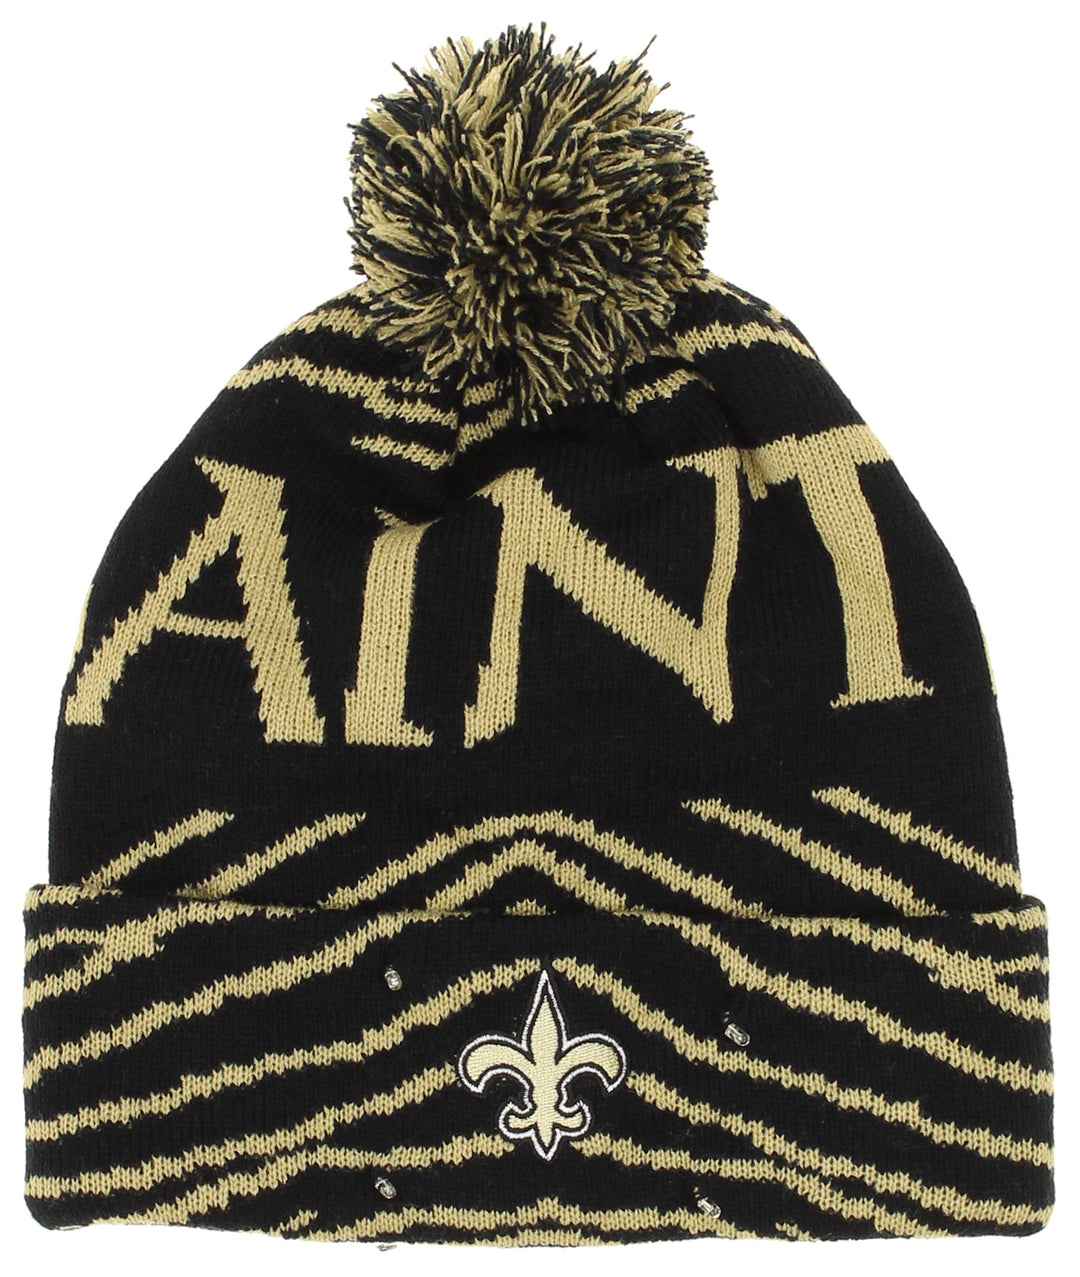 FOCO X Zubaz NFL Collab 3 Pack Glove Scarf & Hat Outdoor Winter Set, New Orleans Saints